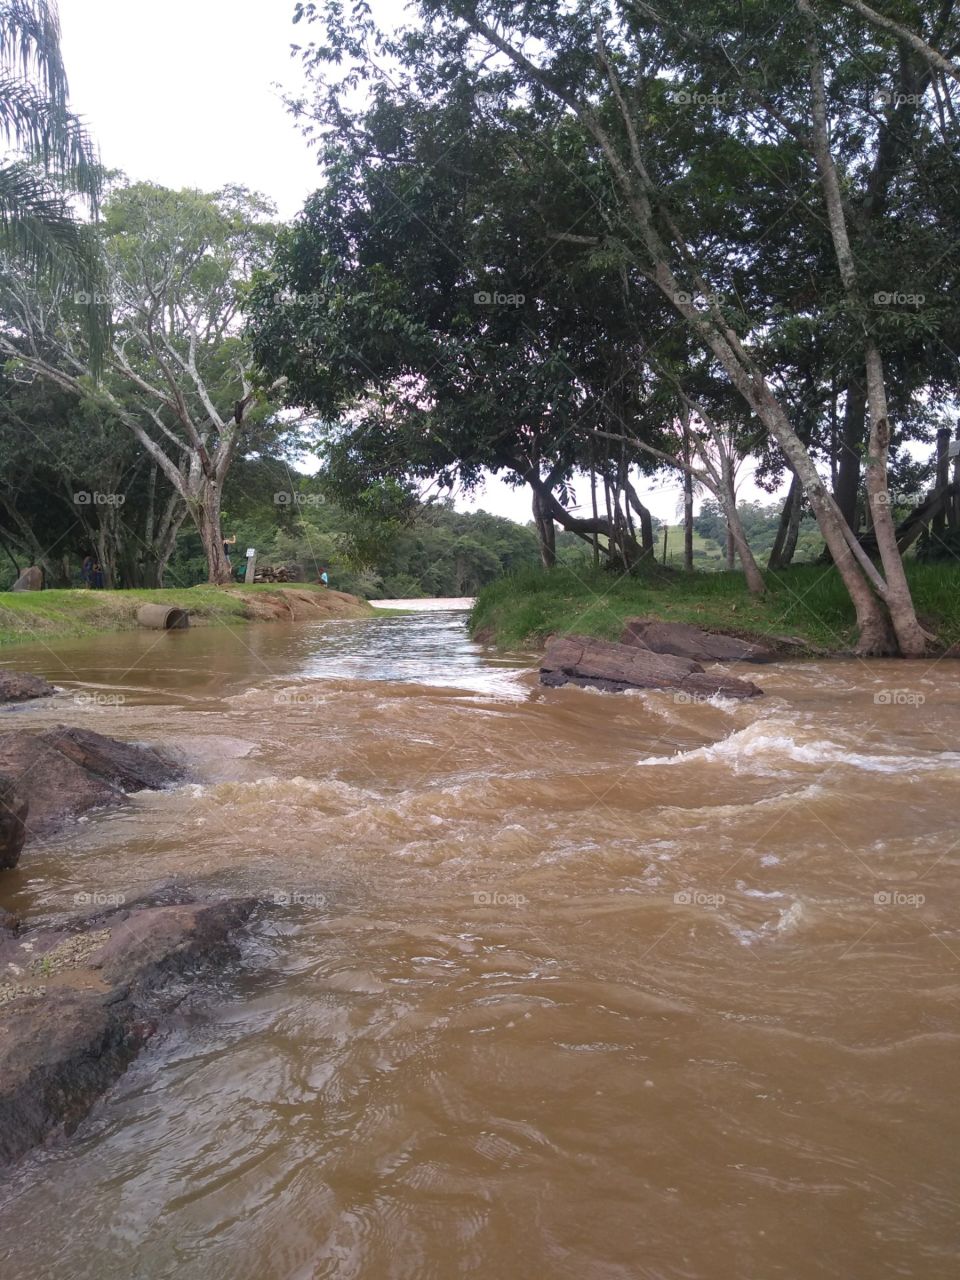 River in Paraguaçu, MG, Brasil, perfect for a good rafting